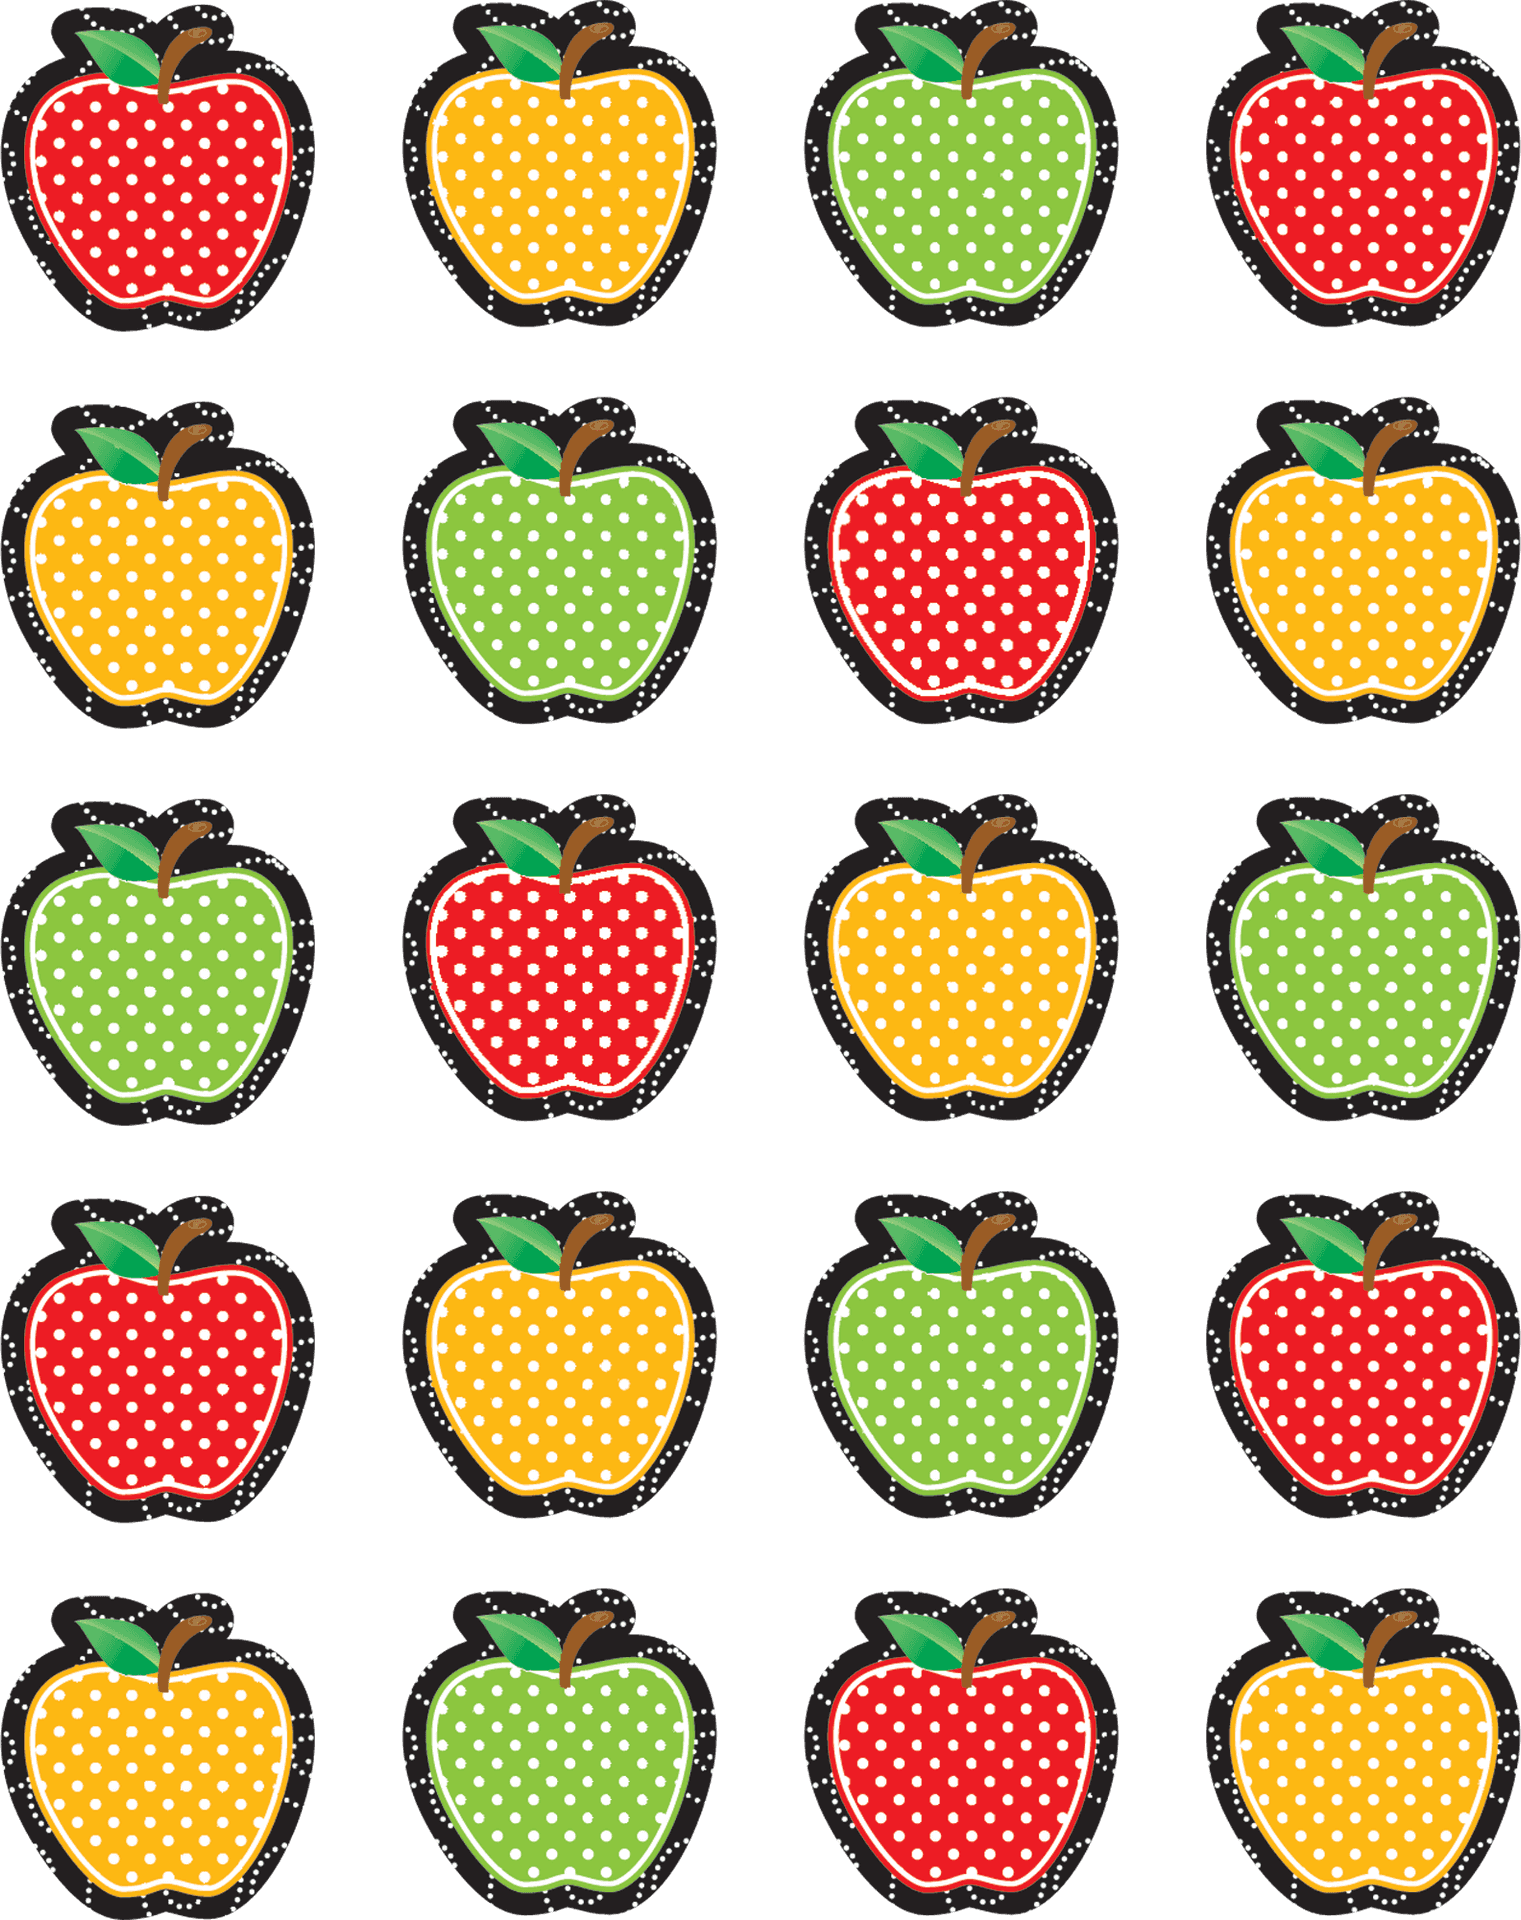 Colorful Polka Dot Apples Pattern PNG